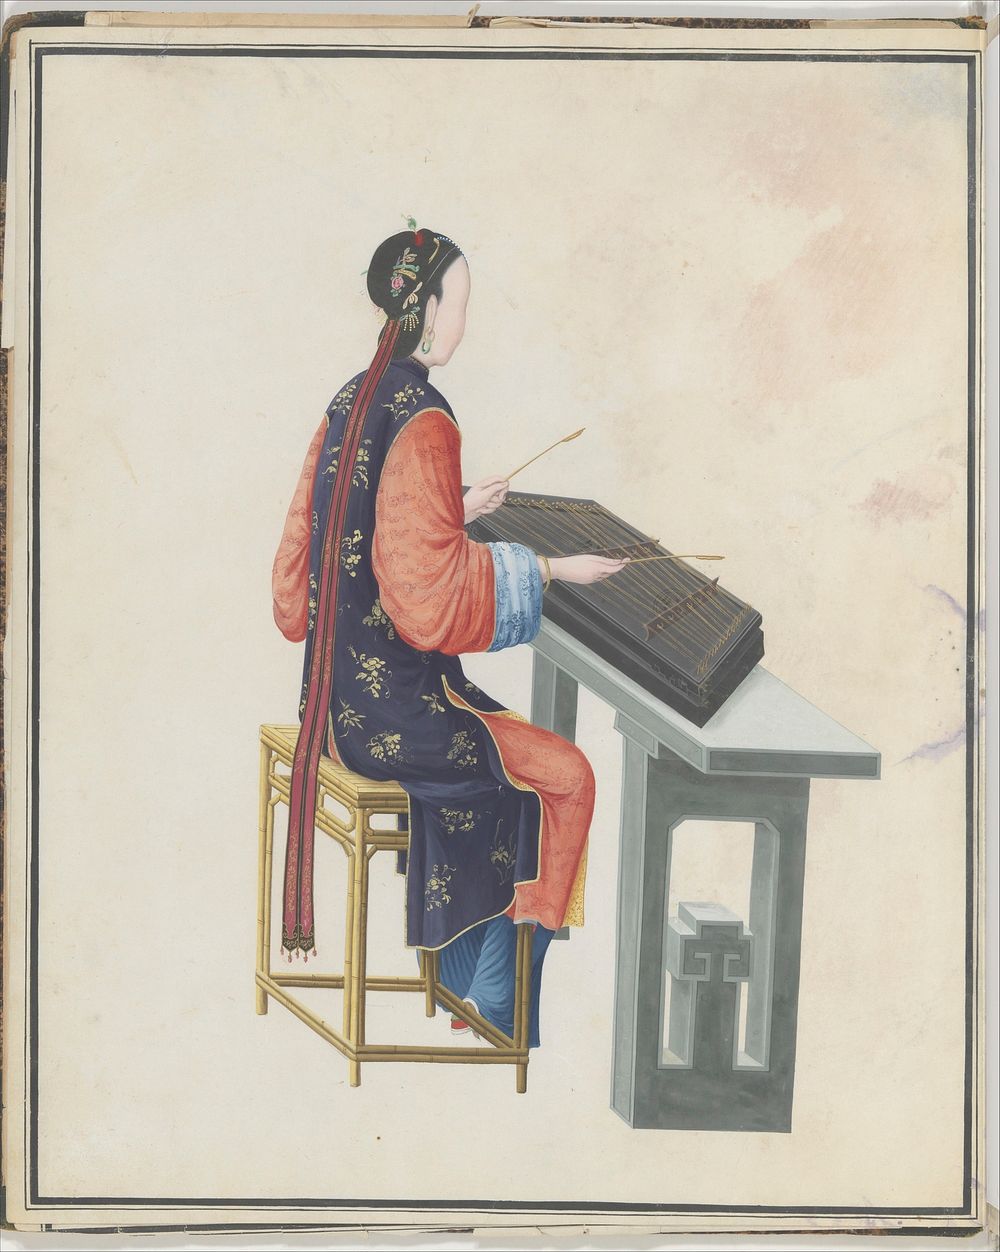 Watercolor of musician playing yangqin, Chinese